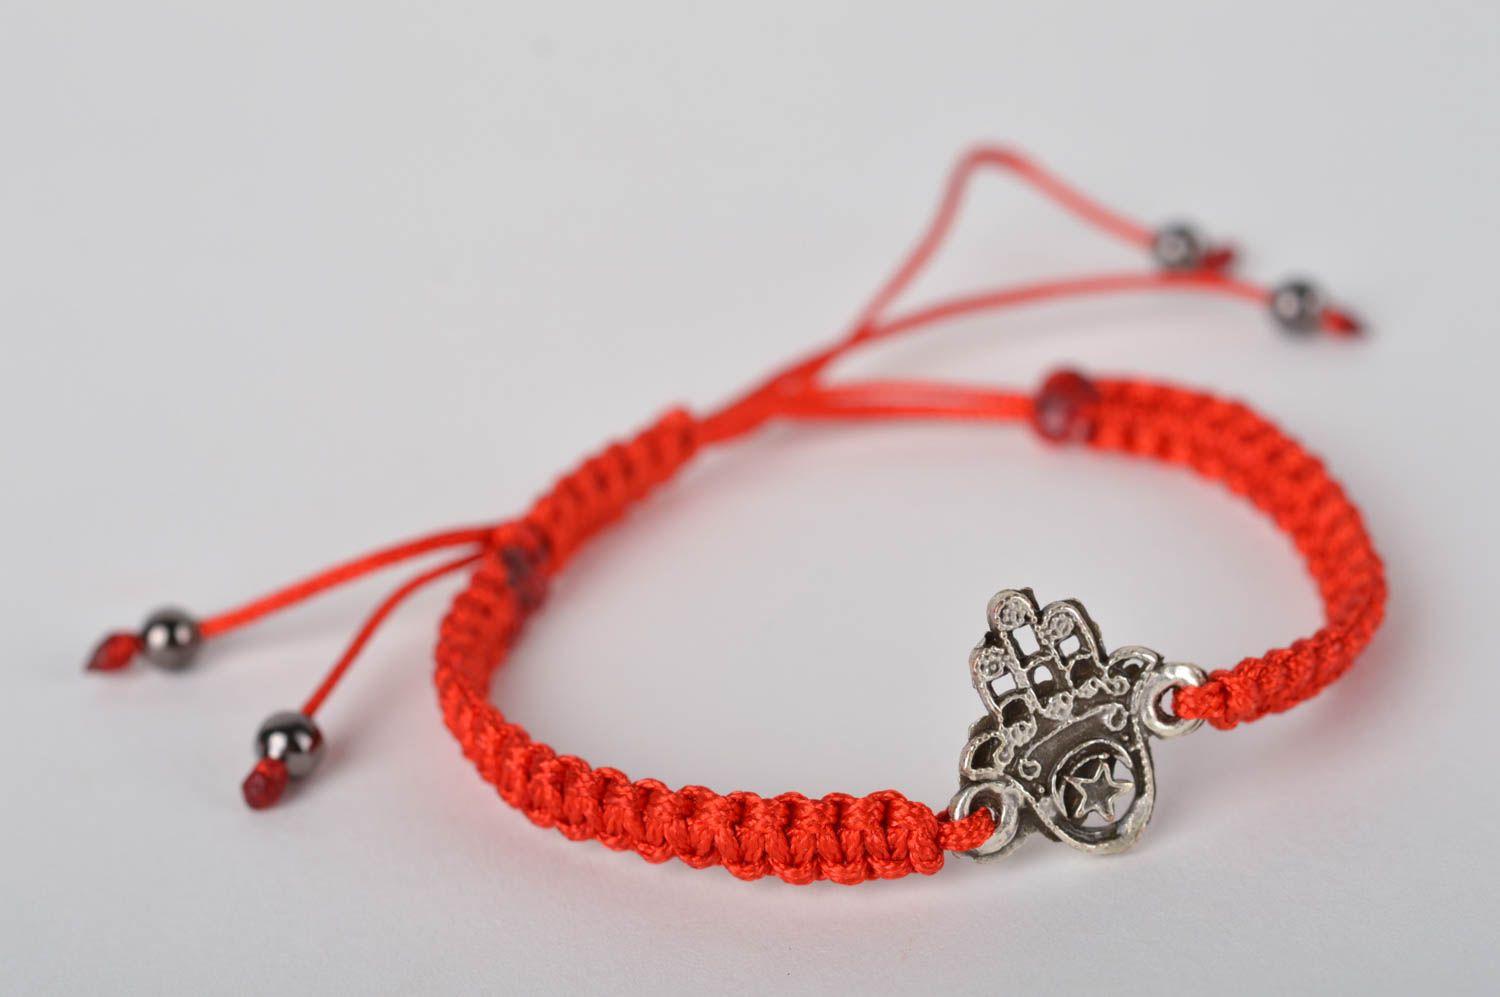 Unusual handmade wrist bracelet fashion tips string bracelet designs gift ideas photo 2